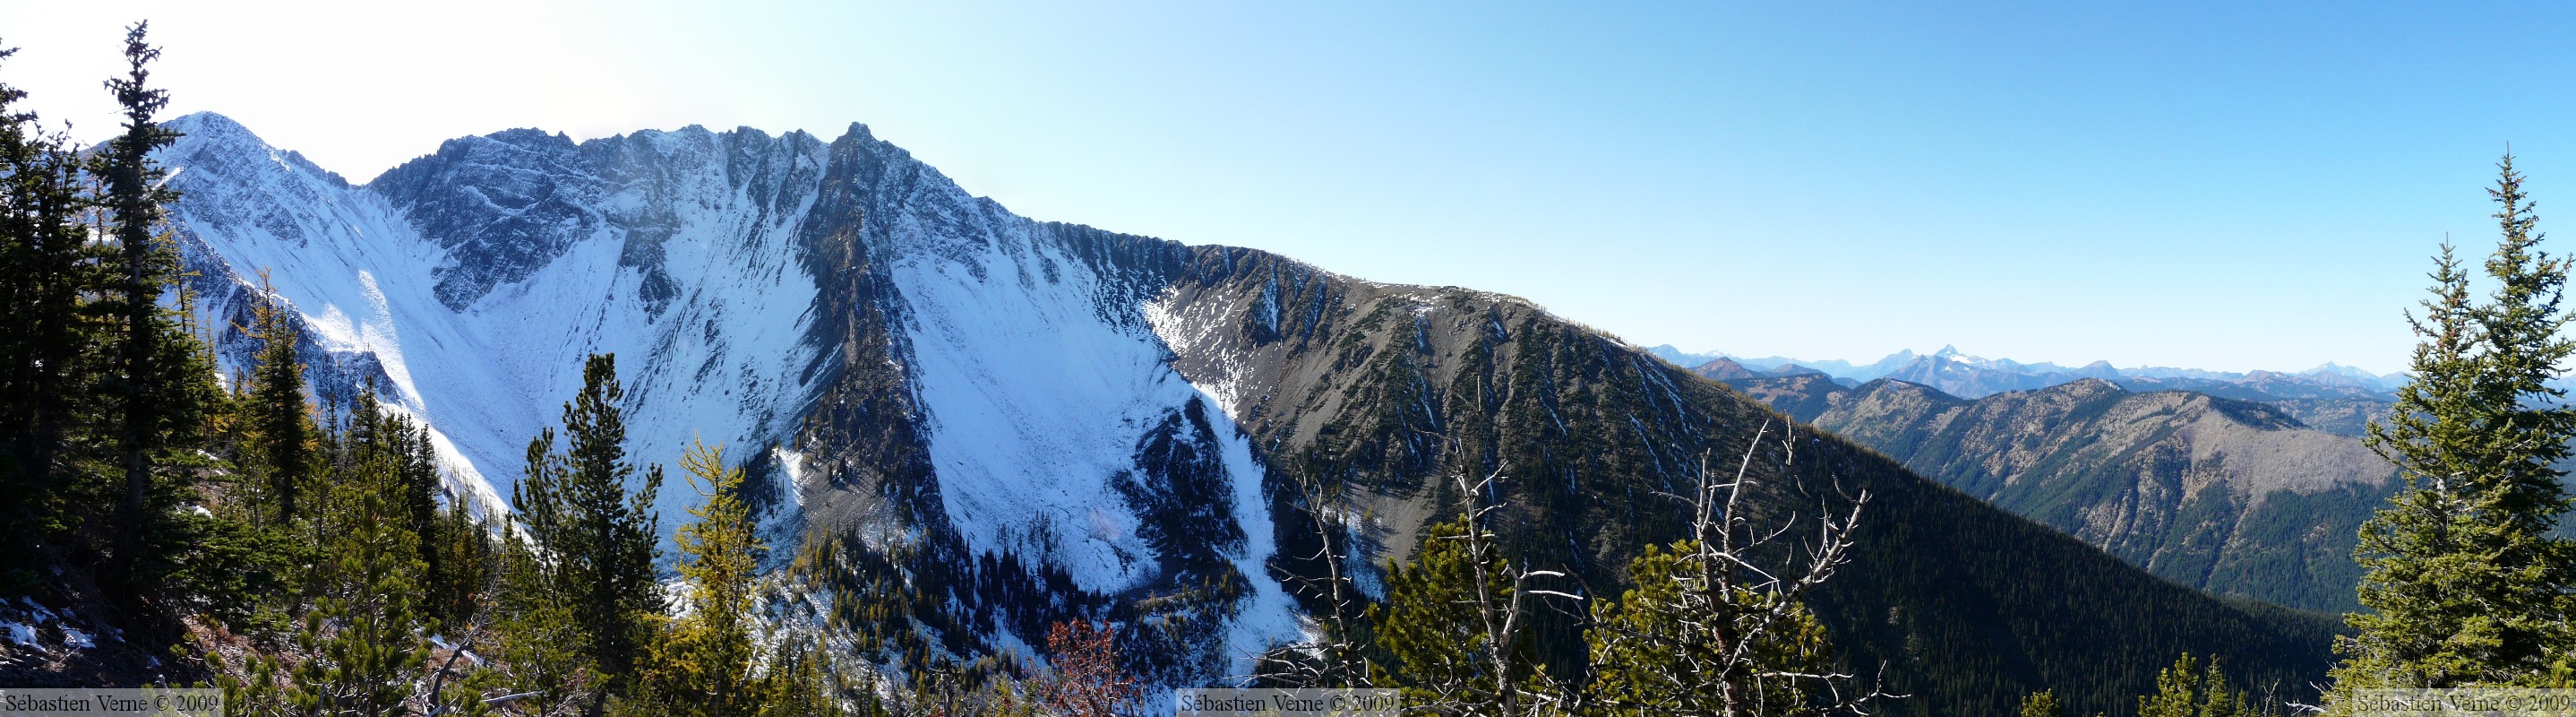 Frosty Mountain panorama 2.jpg